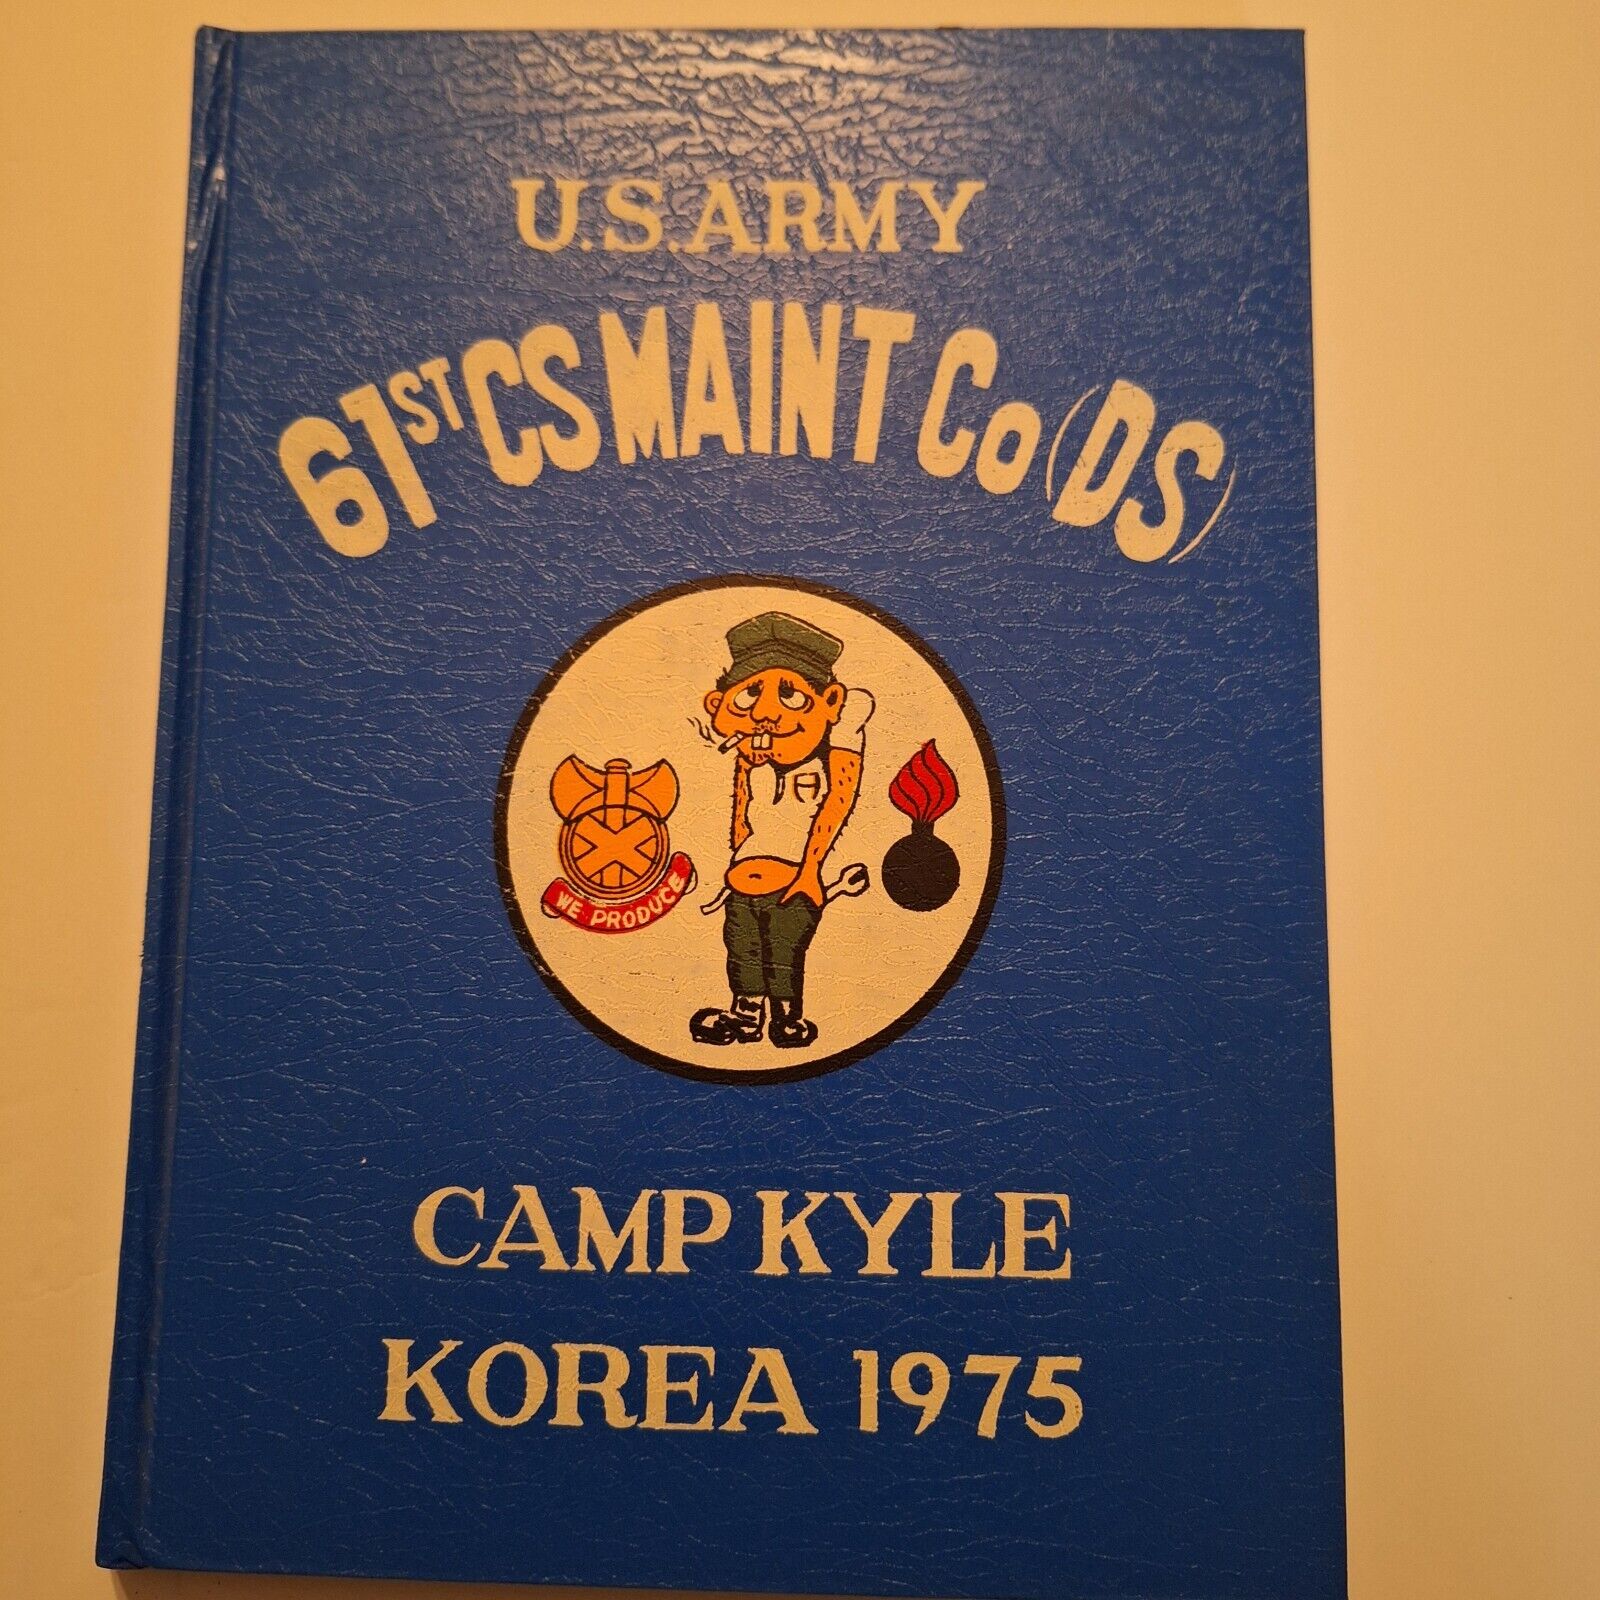 U.S. Army 61st CS Maintenance Company (DS) Camp Kyle Korea 1975